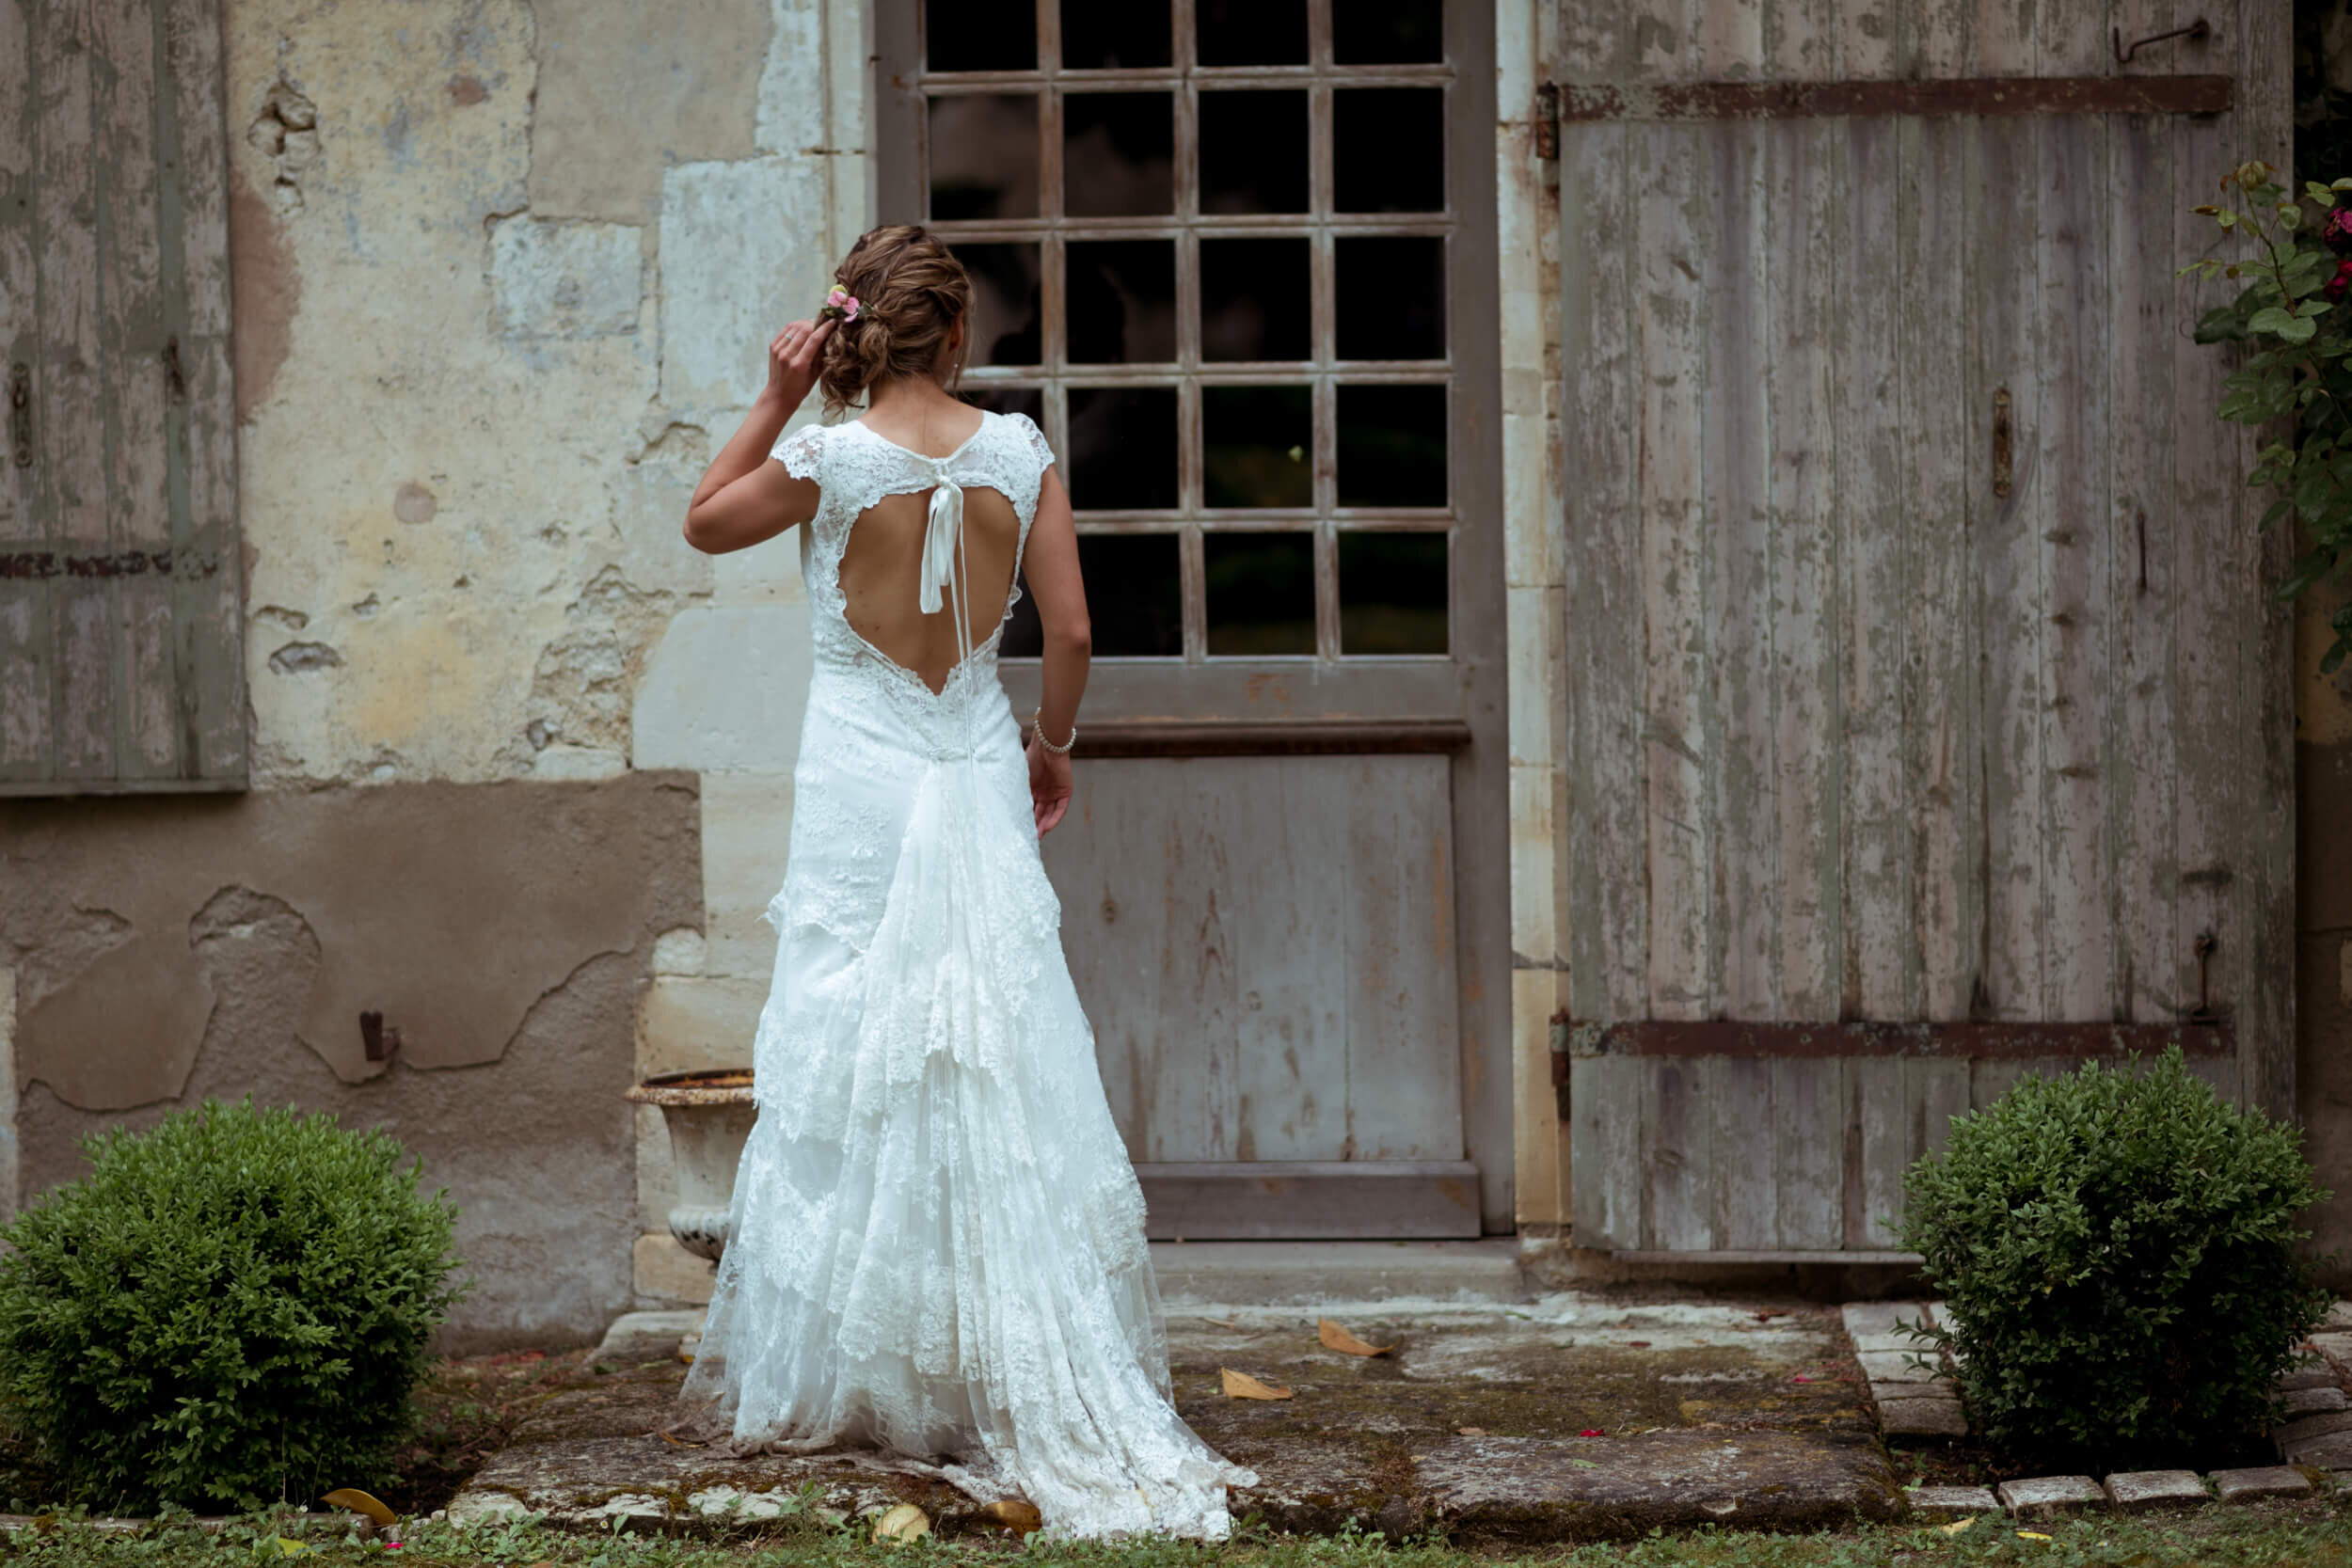 Puyrigaud photographe mariage wedding photographer robe de mariée